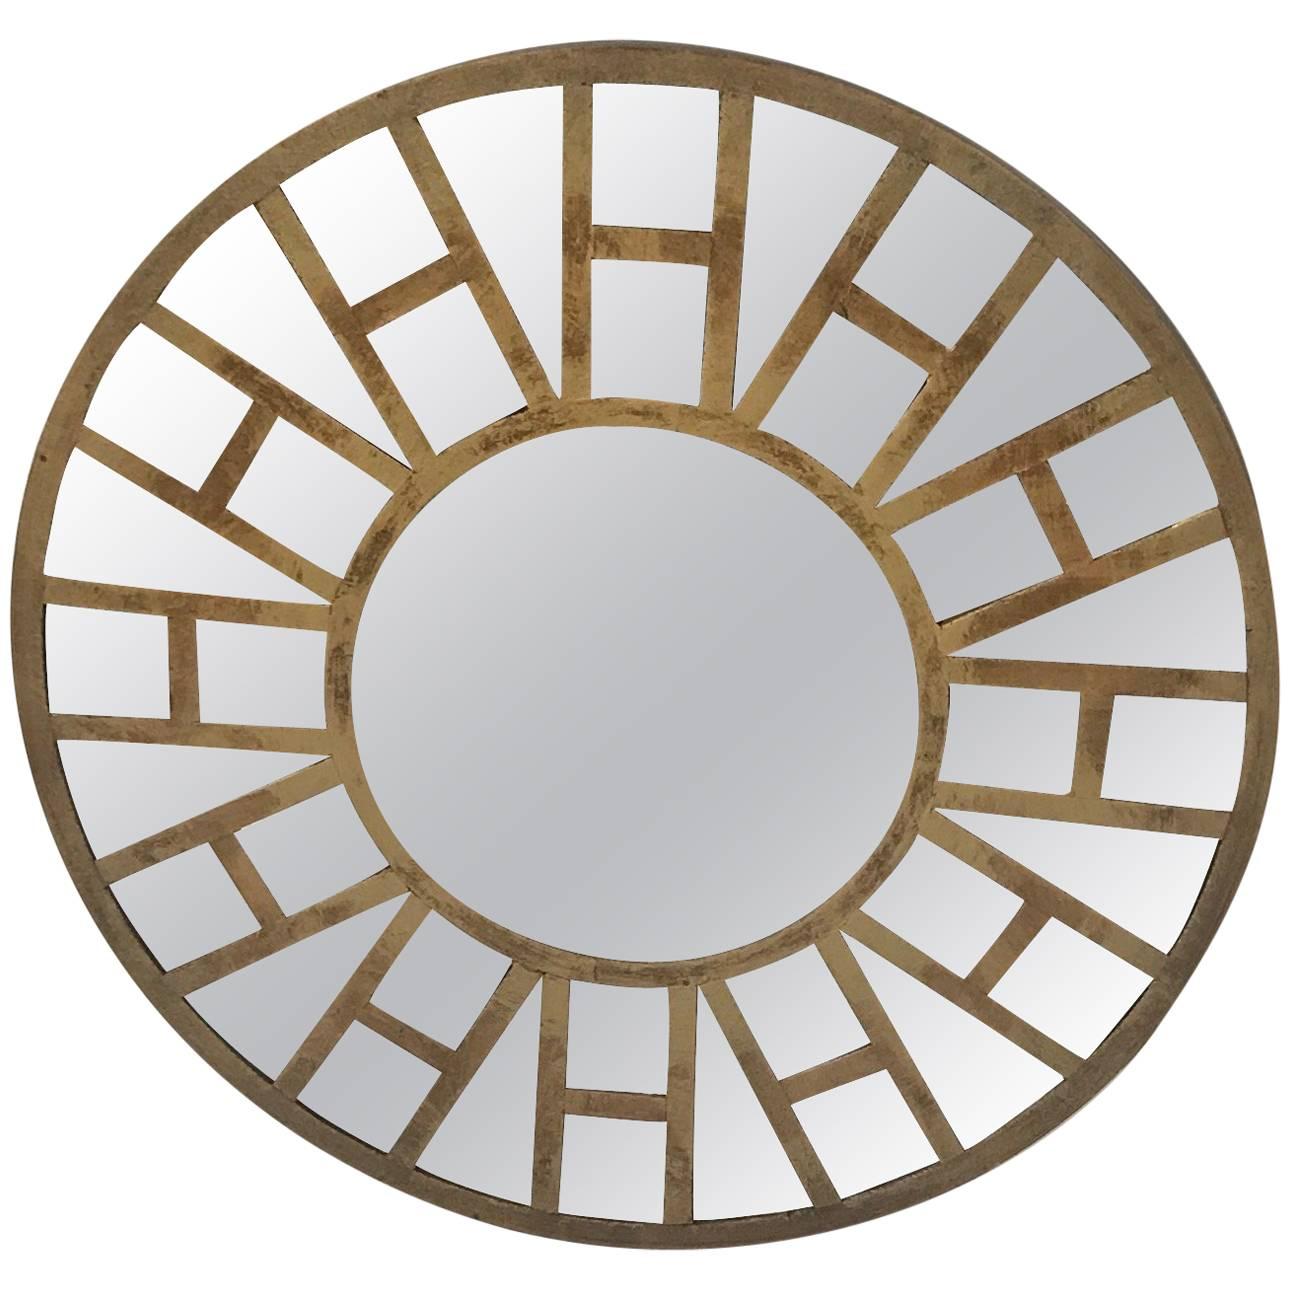 Stylish Mid-Century Modern Round Mirror with Brass Overlay